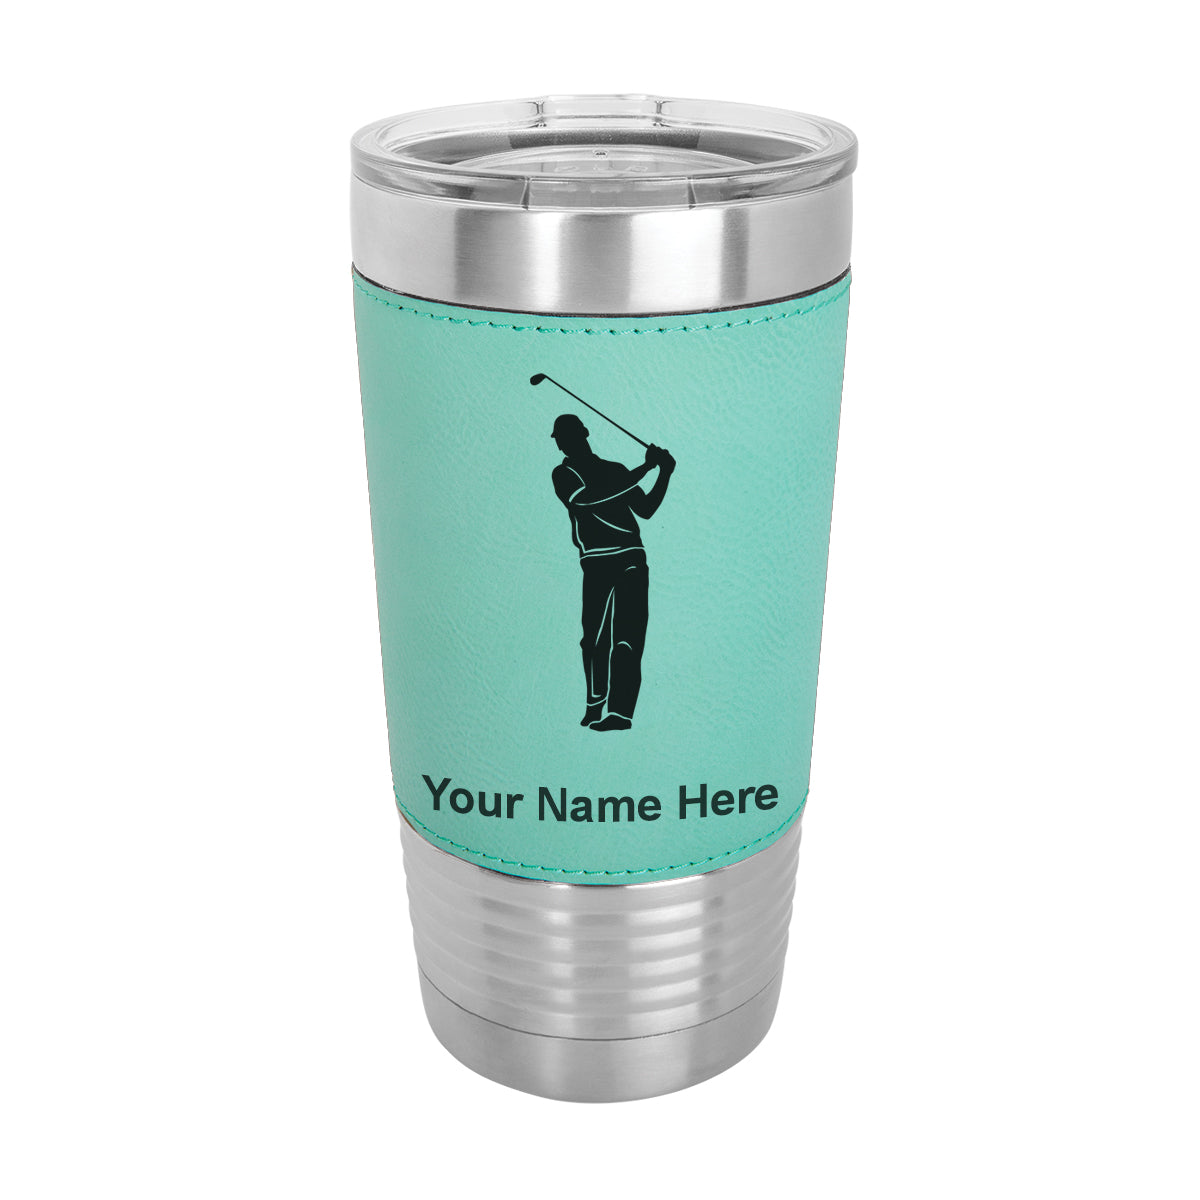 20oz Faux Leather Tumbler Mug, Golfer, Personalized Engraving Included - LaserGram Custom Engraved Gifts